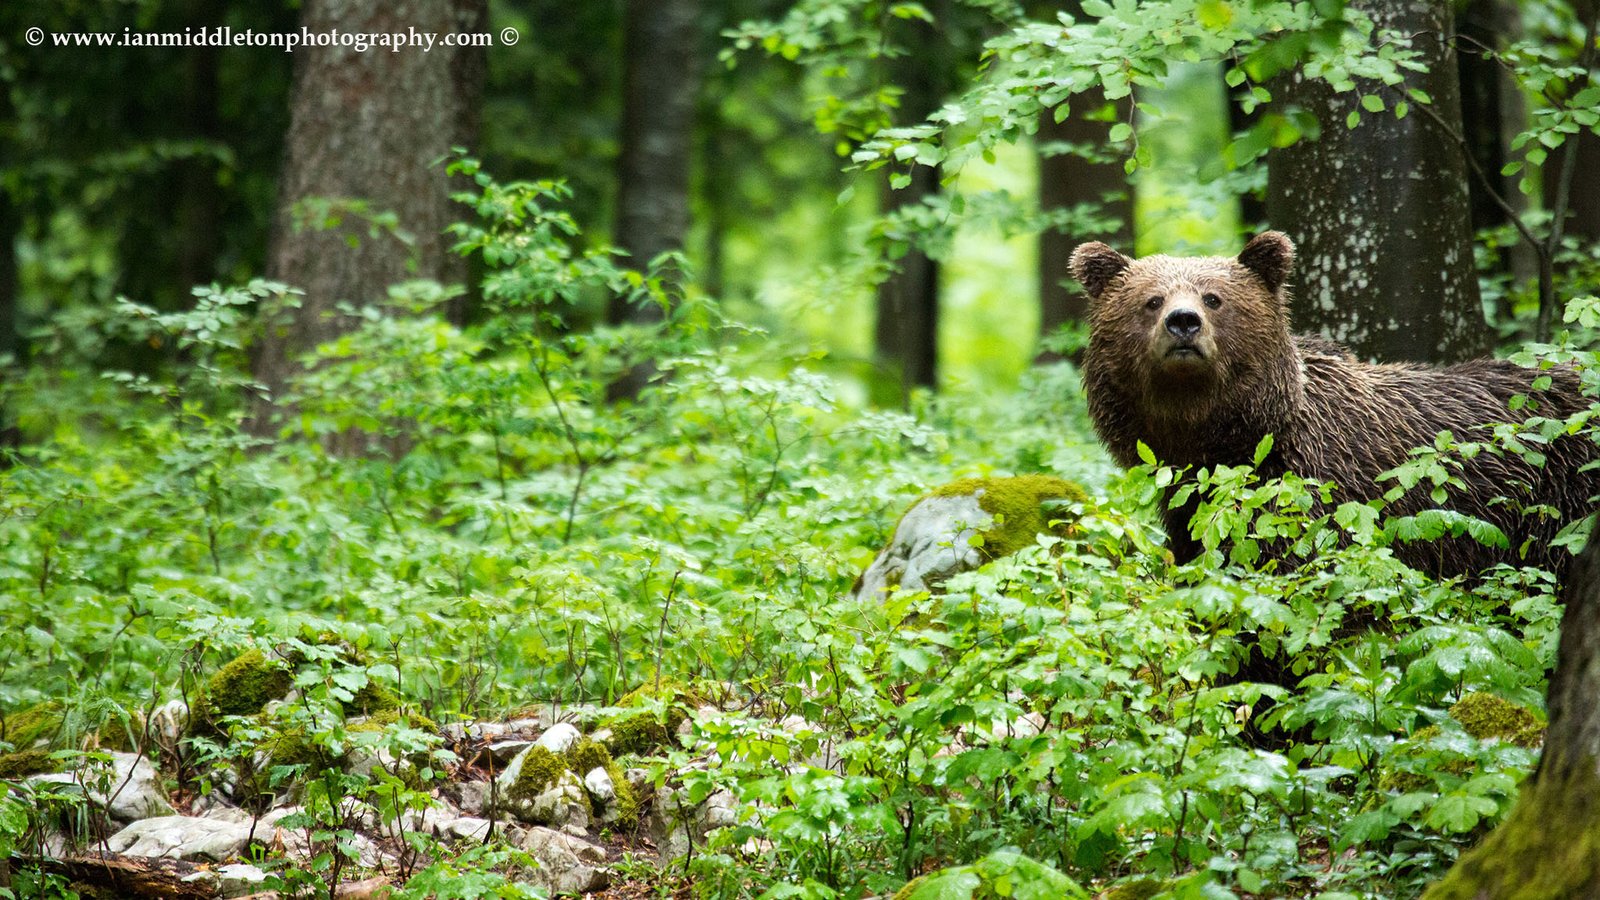 Brown Bear in the forest in Notranjska, Slovenia.